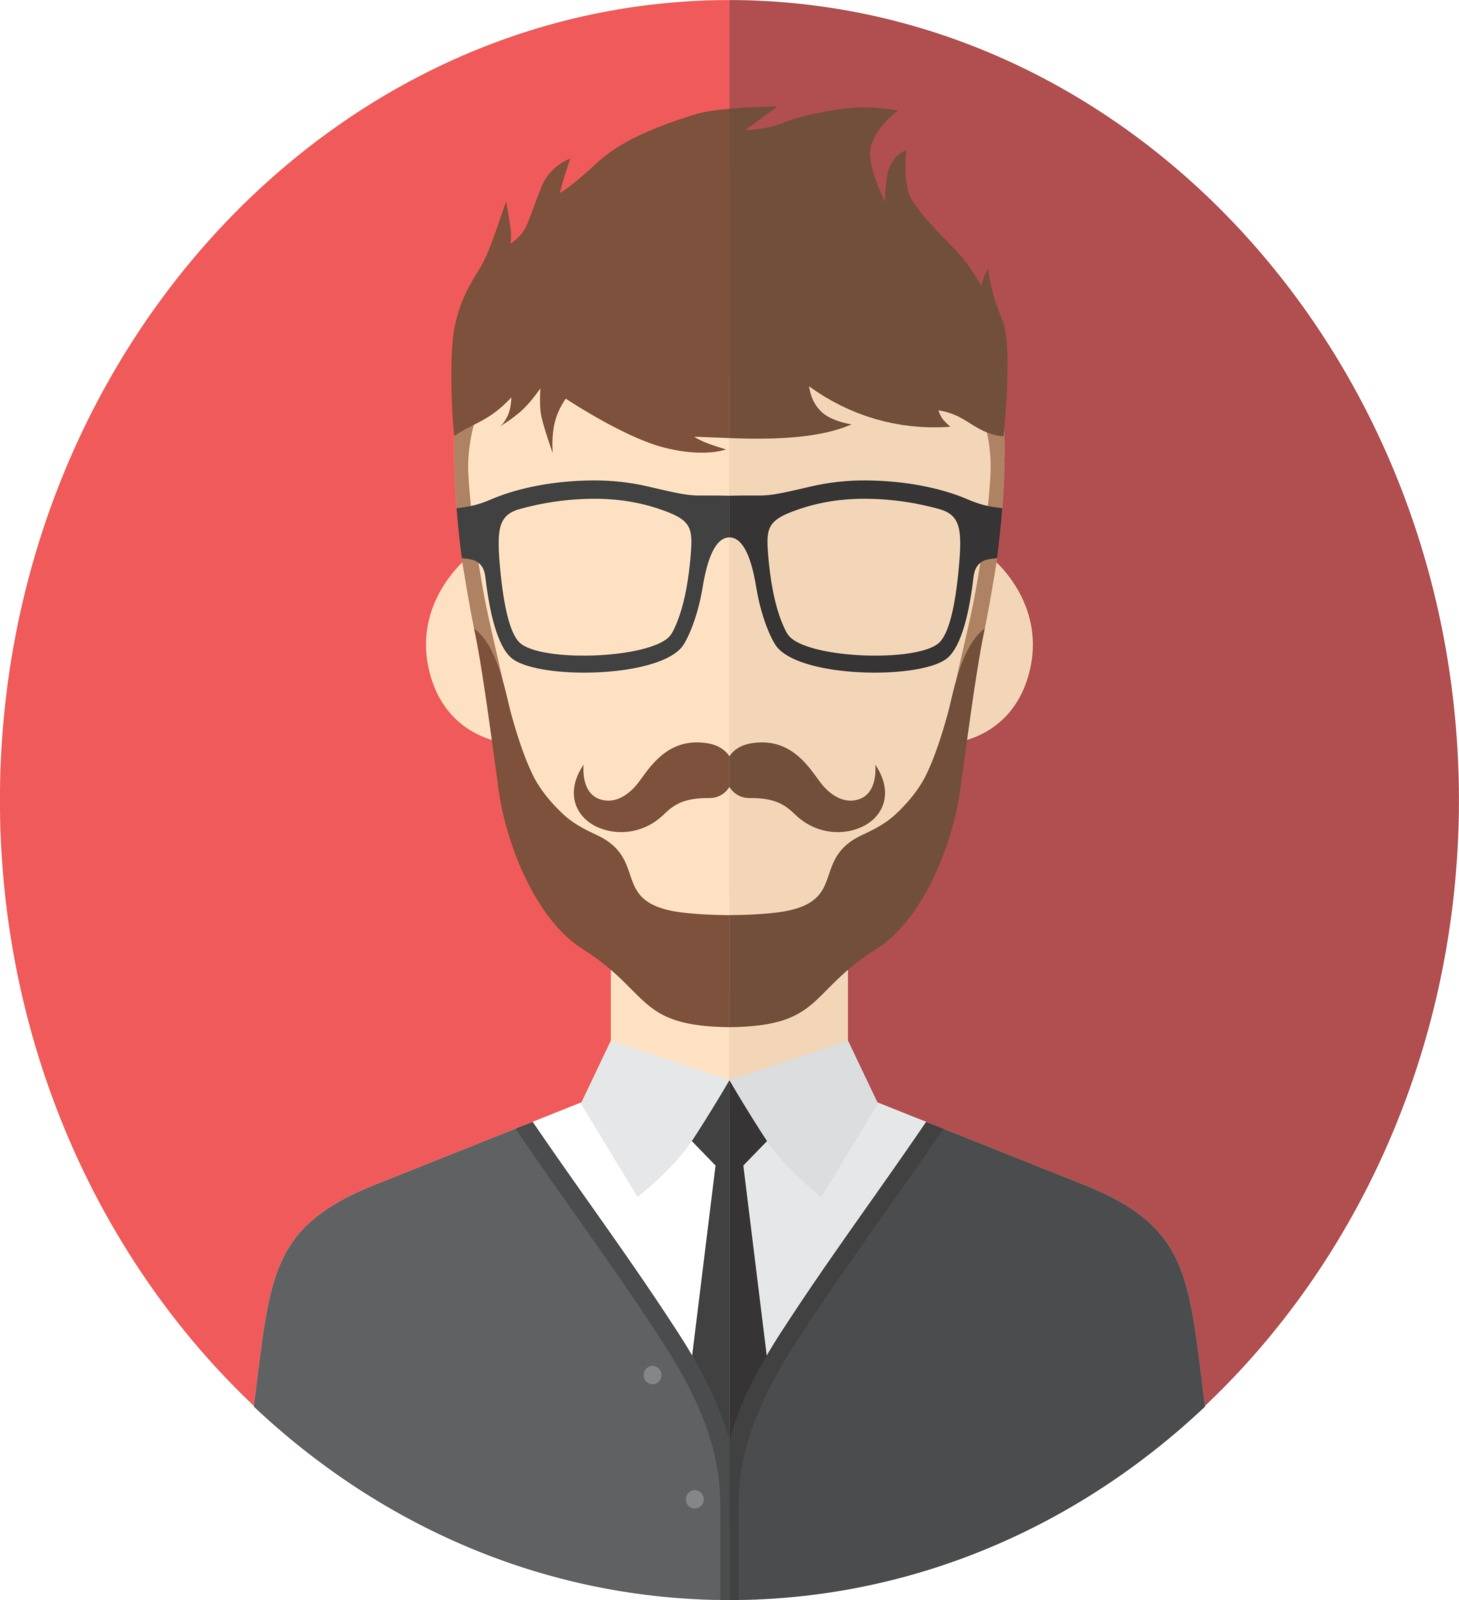 retro gentleman avatar portrait profile picture icon by vector1st